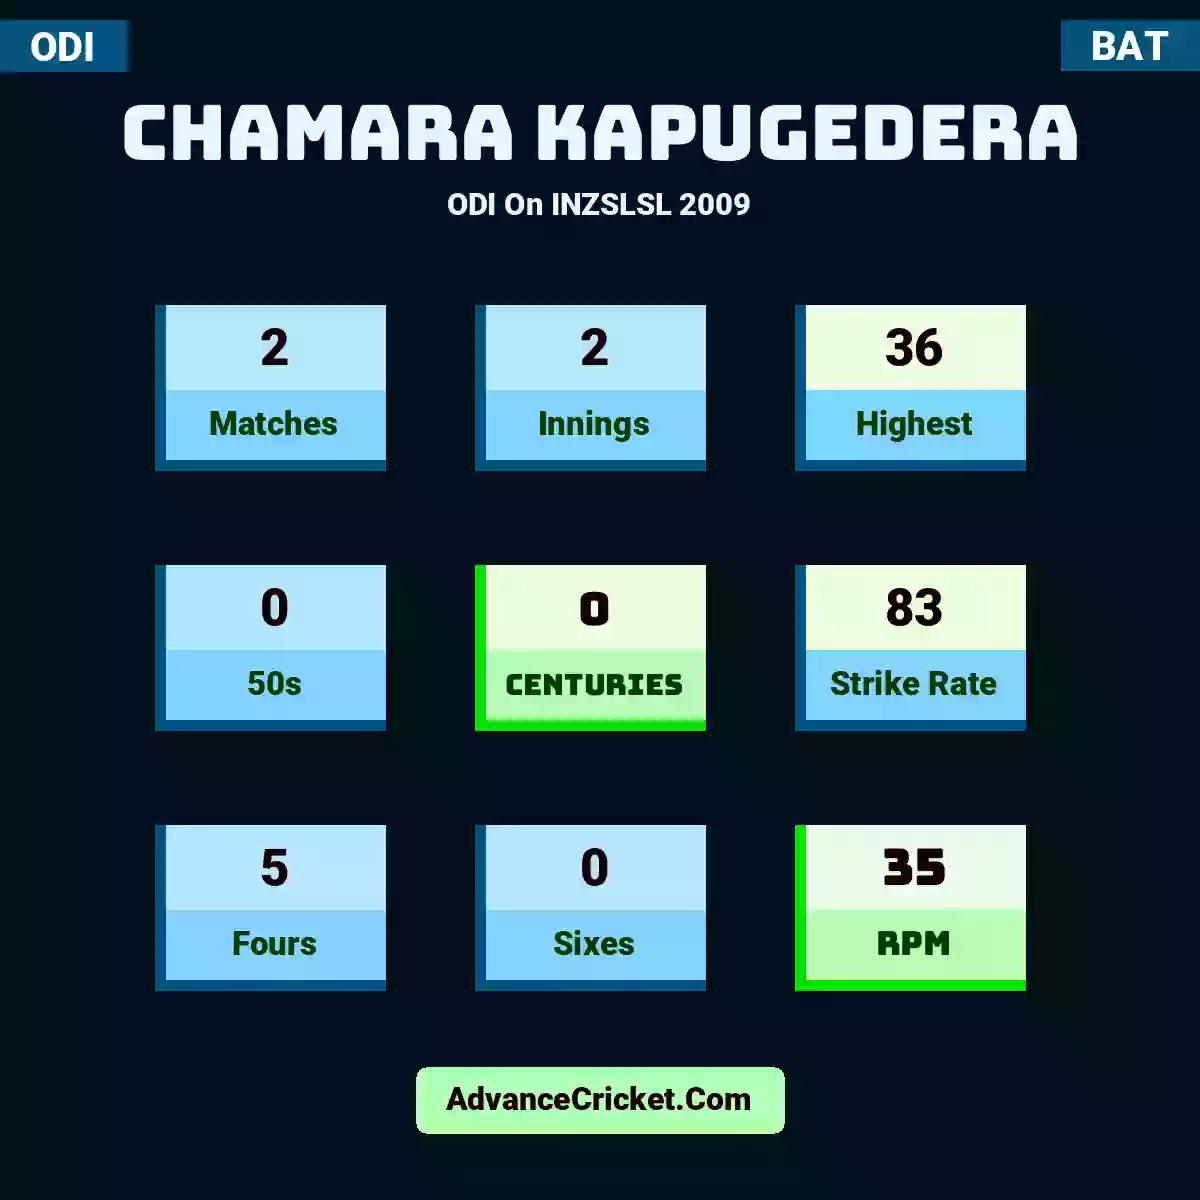 Chamara Kapugedera ODI  On INZSLSL 2009, Chamara Kapugedera played 2 matches, scored 36 runs as highest, 0 half-centuries, and 0 centuries, with a strike rate of 83. C.Kapugedera hit 5 fours and 0 sixes, with an RPM of 35.